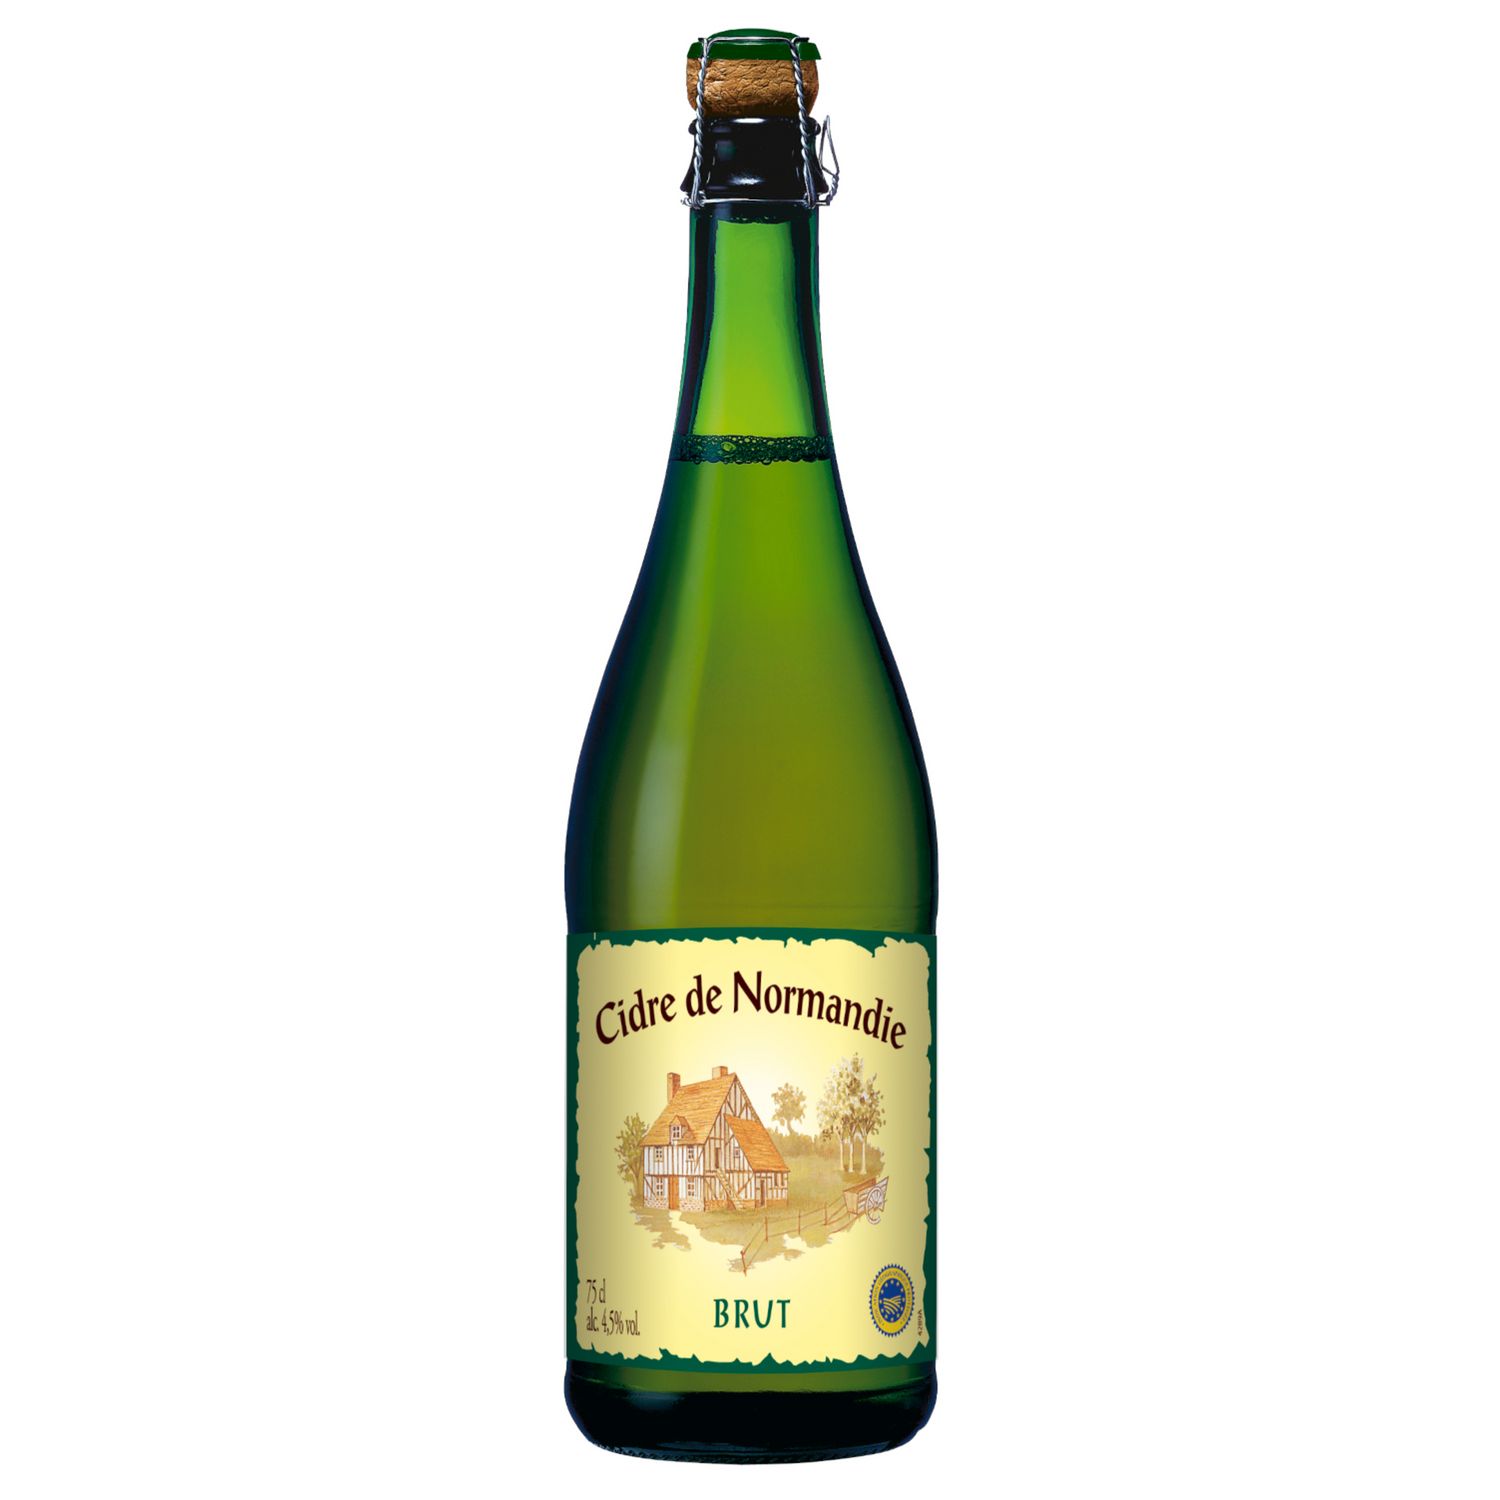 Cidre brut igp cidre normand - Auchan - 0.75 l